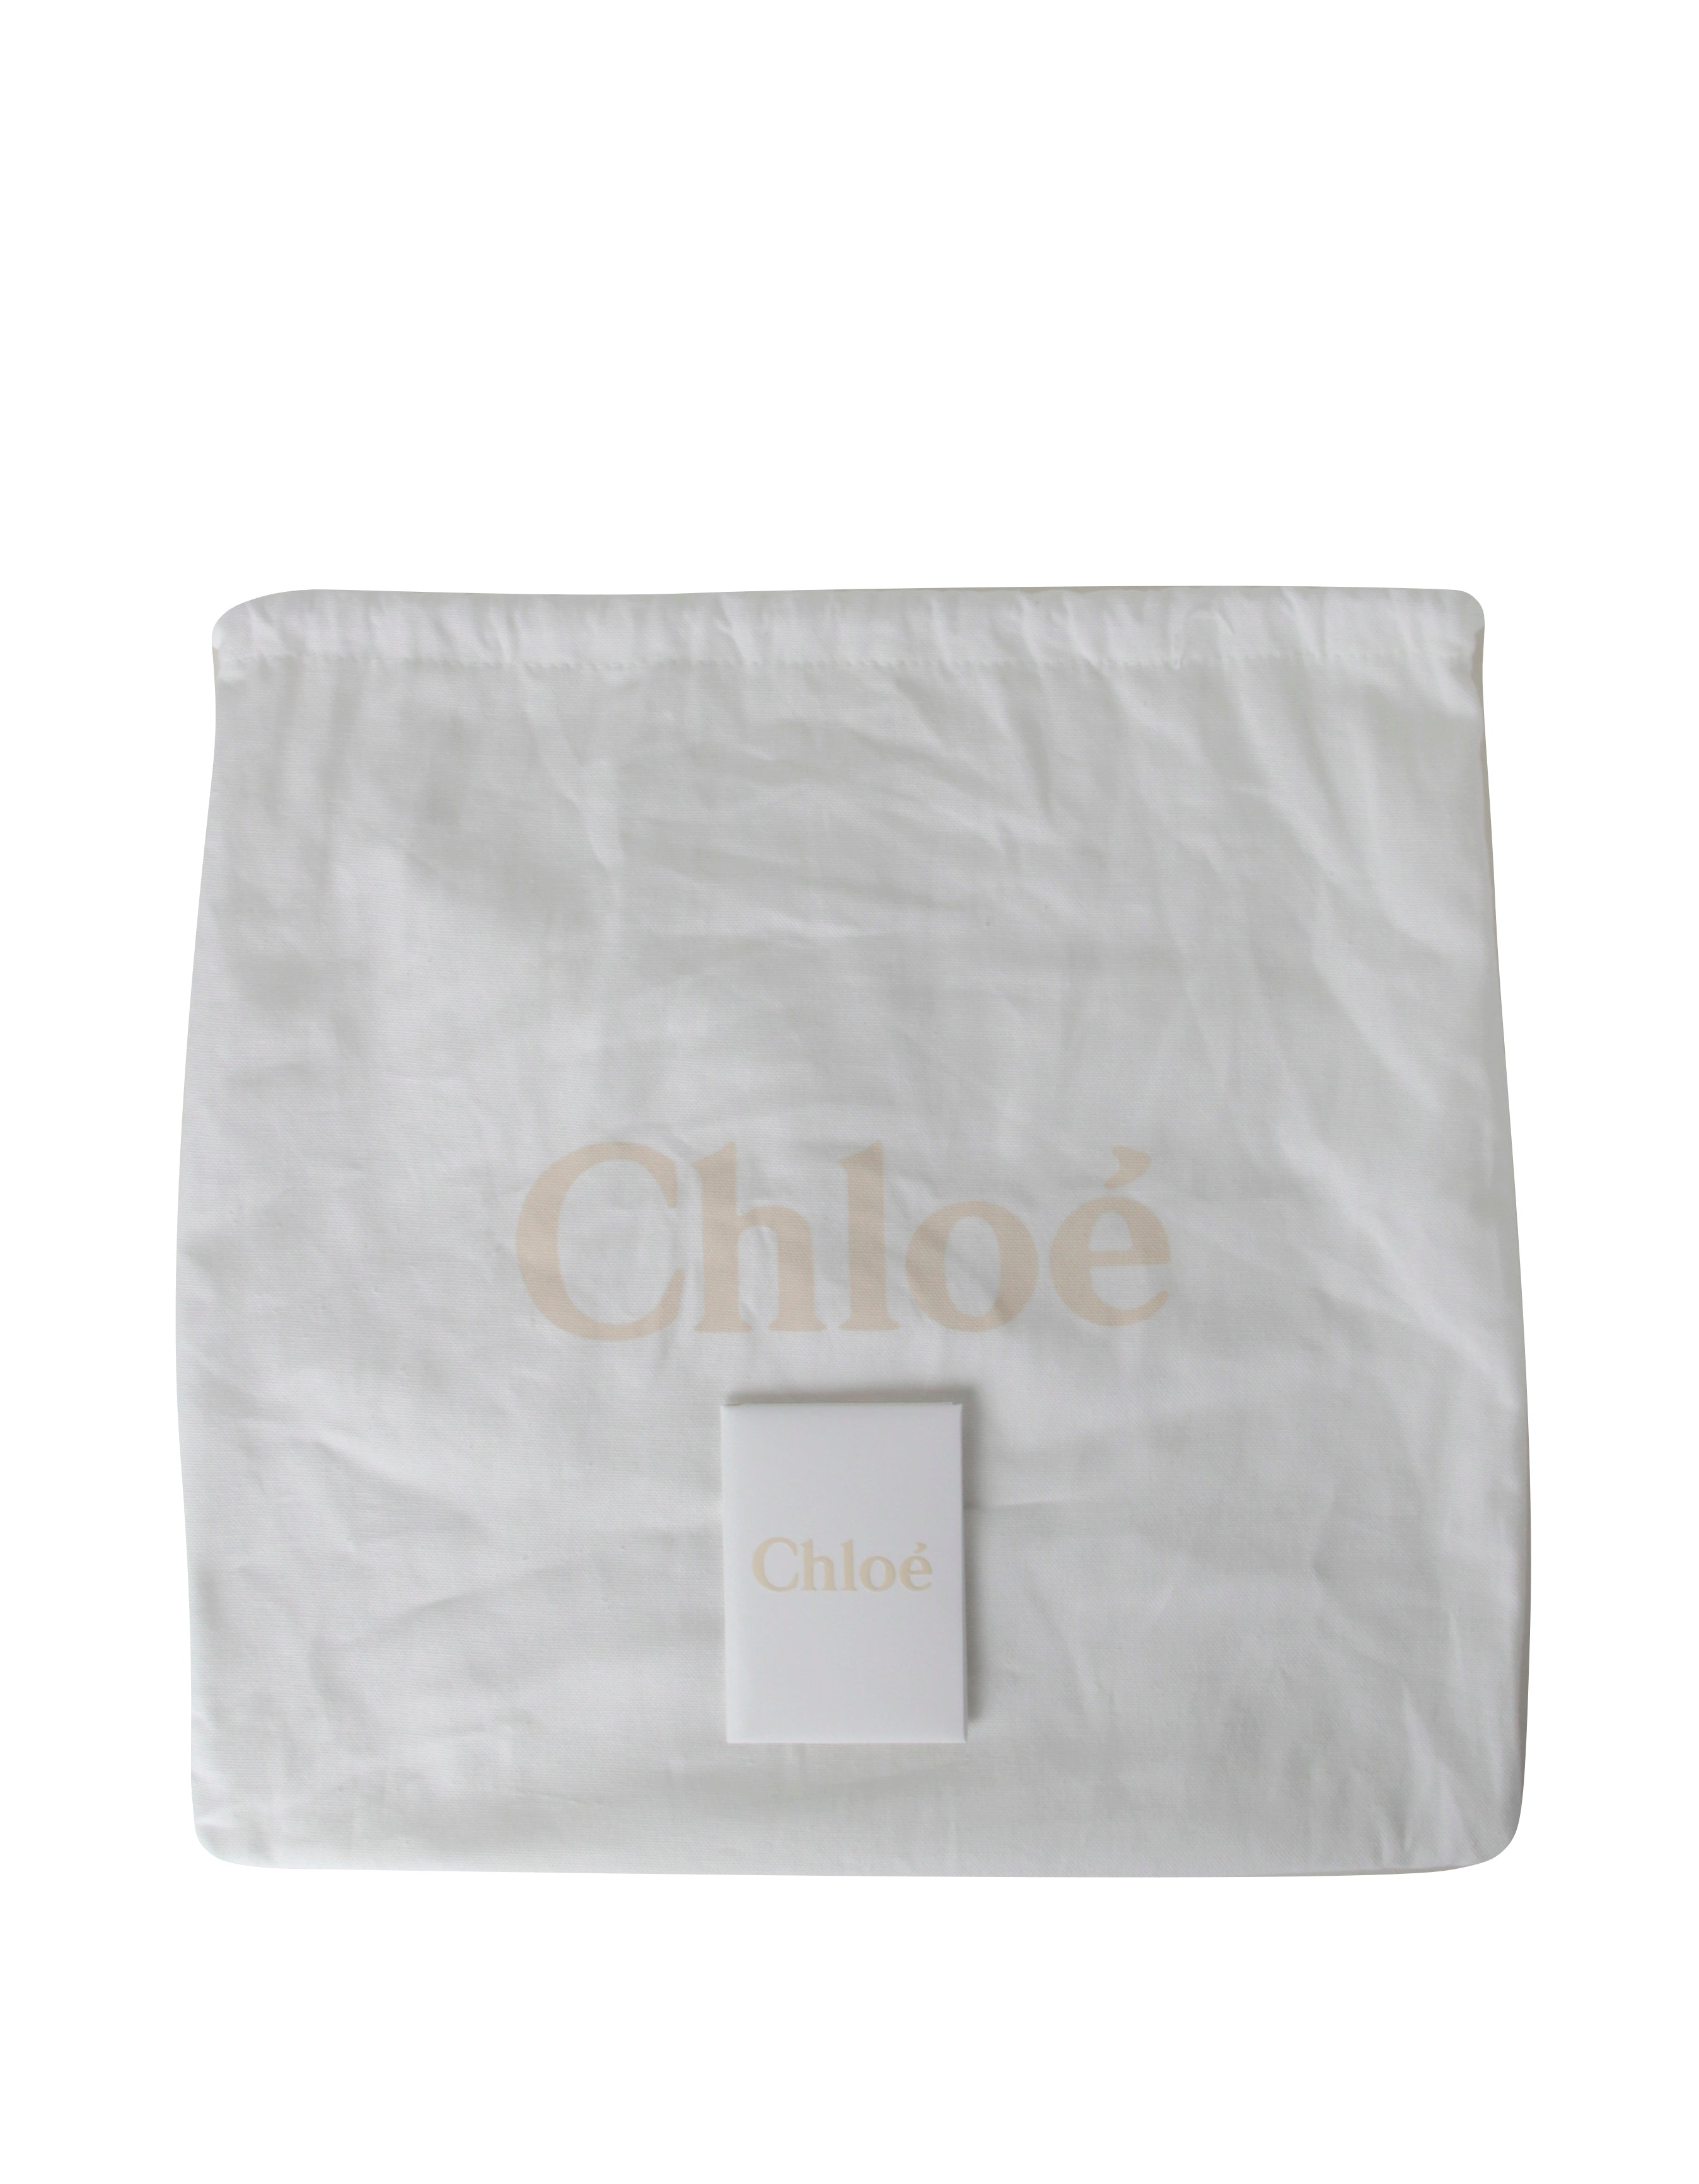 Chloe Cashmere Grey Leather Small Marcie Satchel Bag